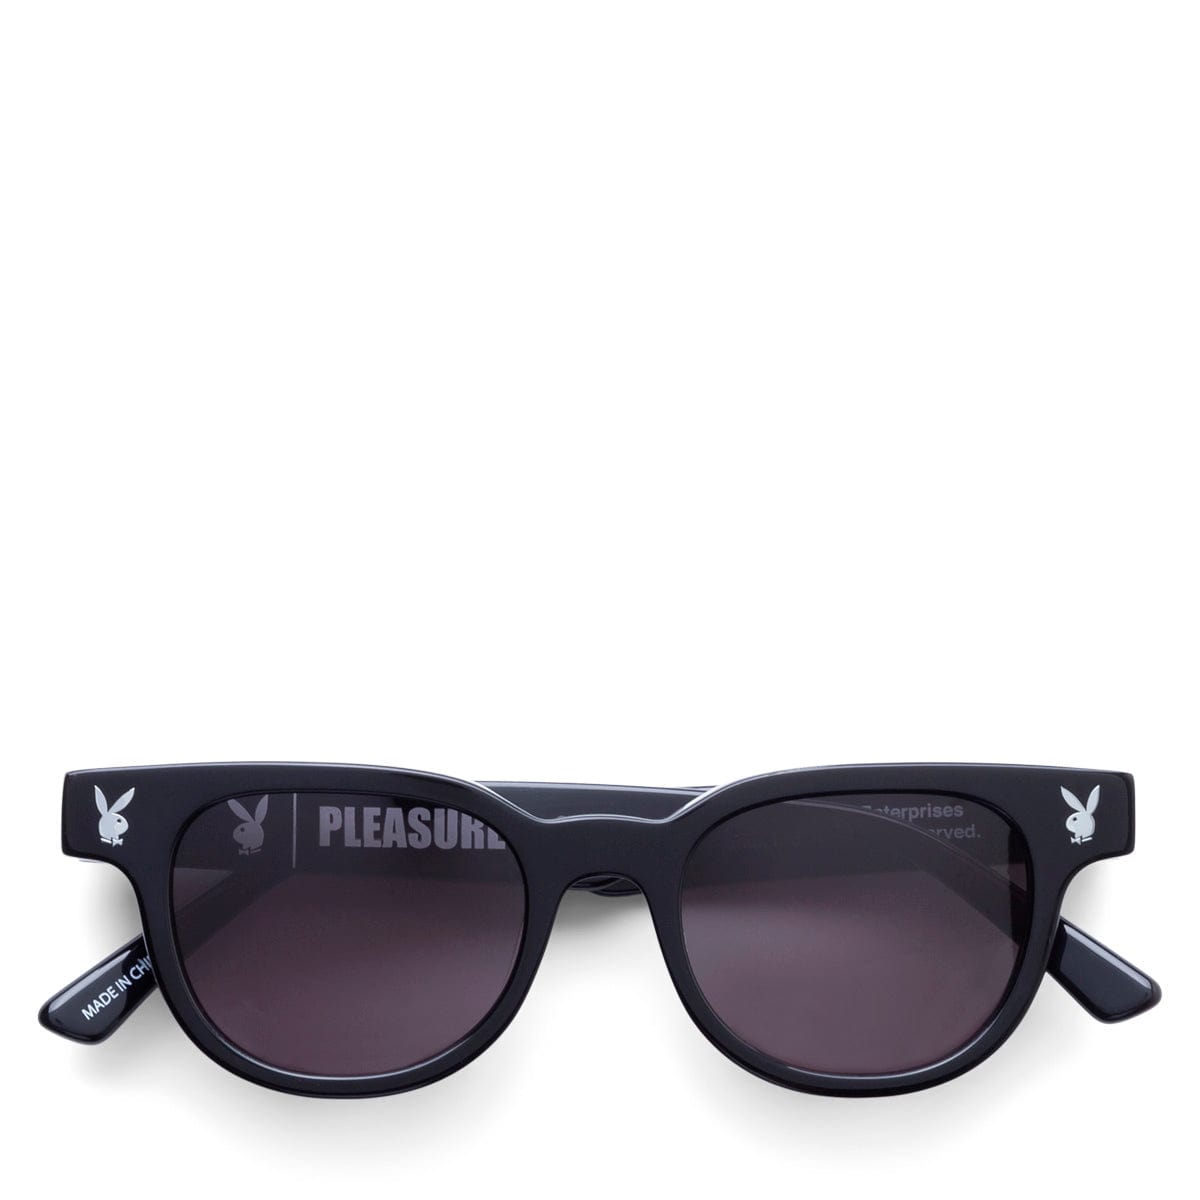 Pleasures Sunglasses BLACK / O/S LIBERATION SUNGLASSES